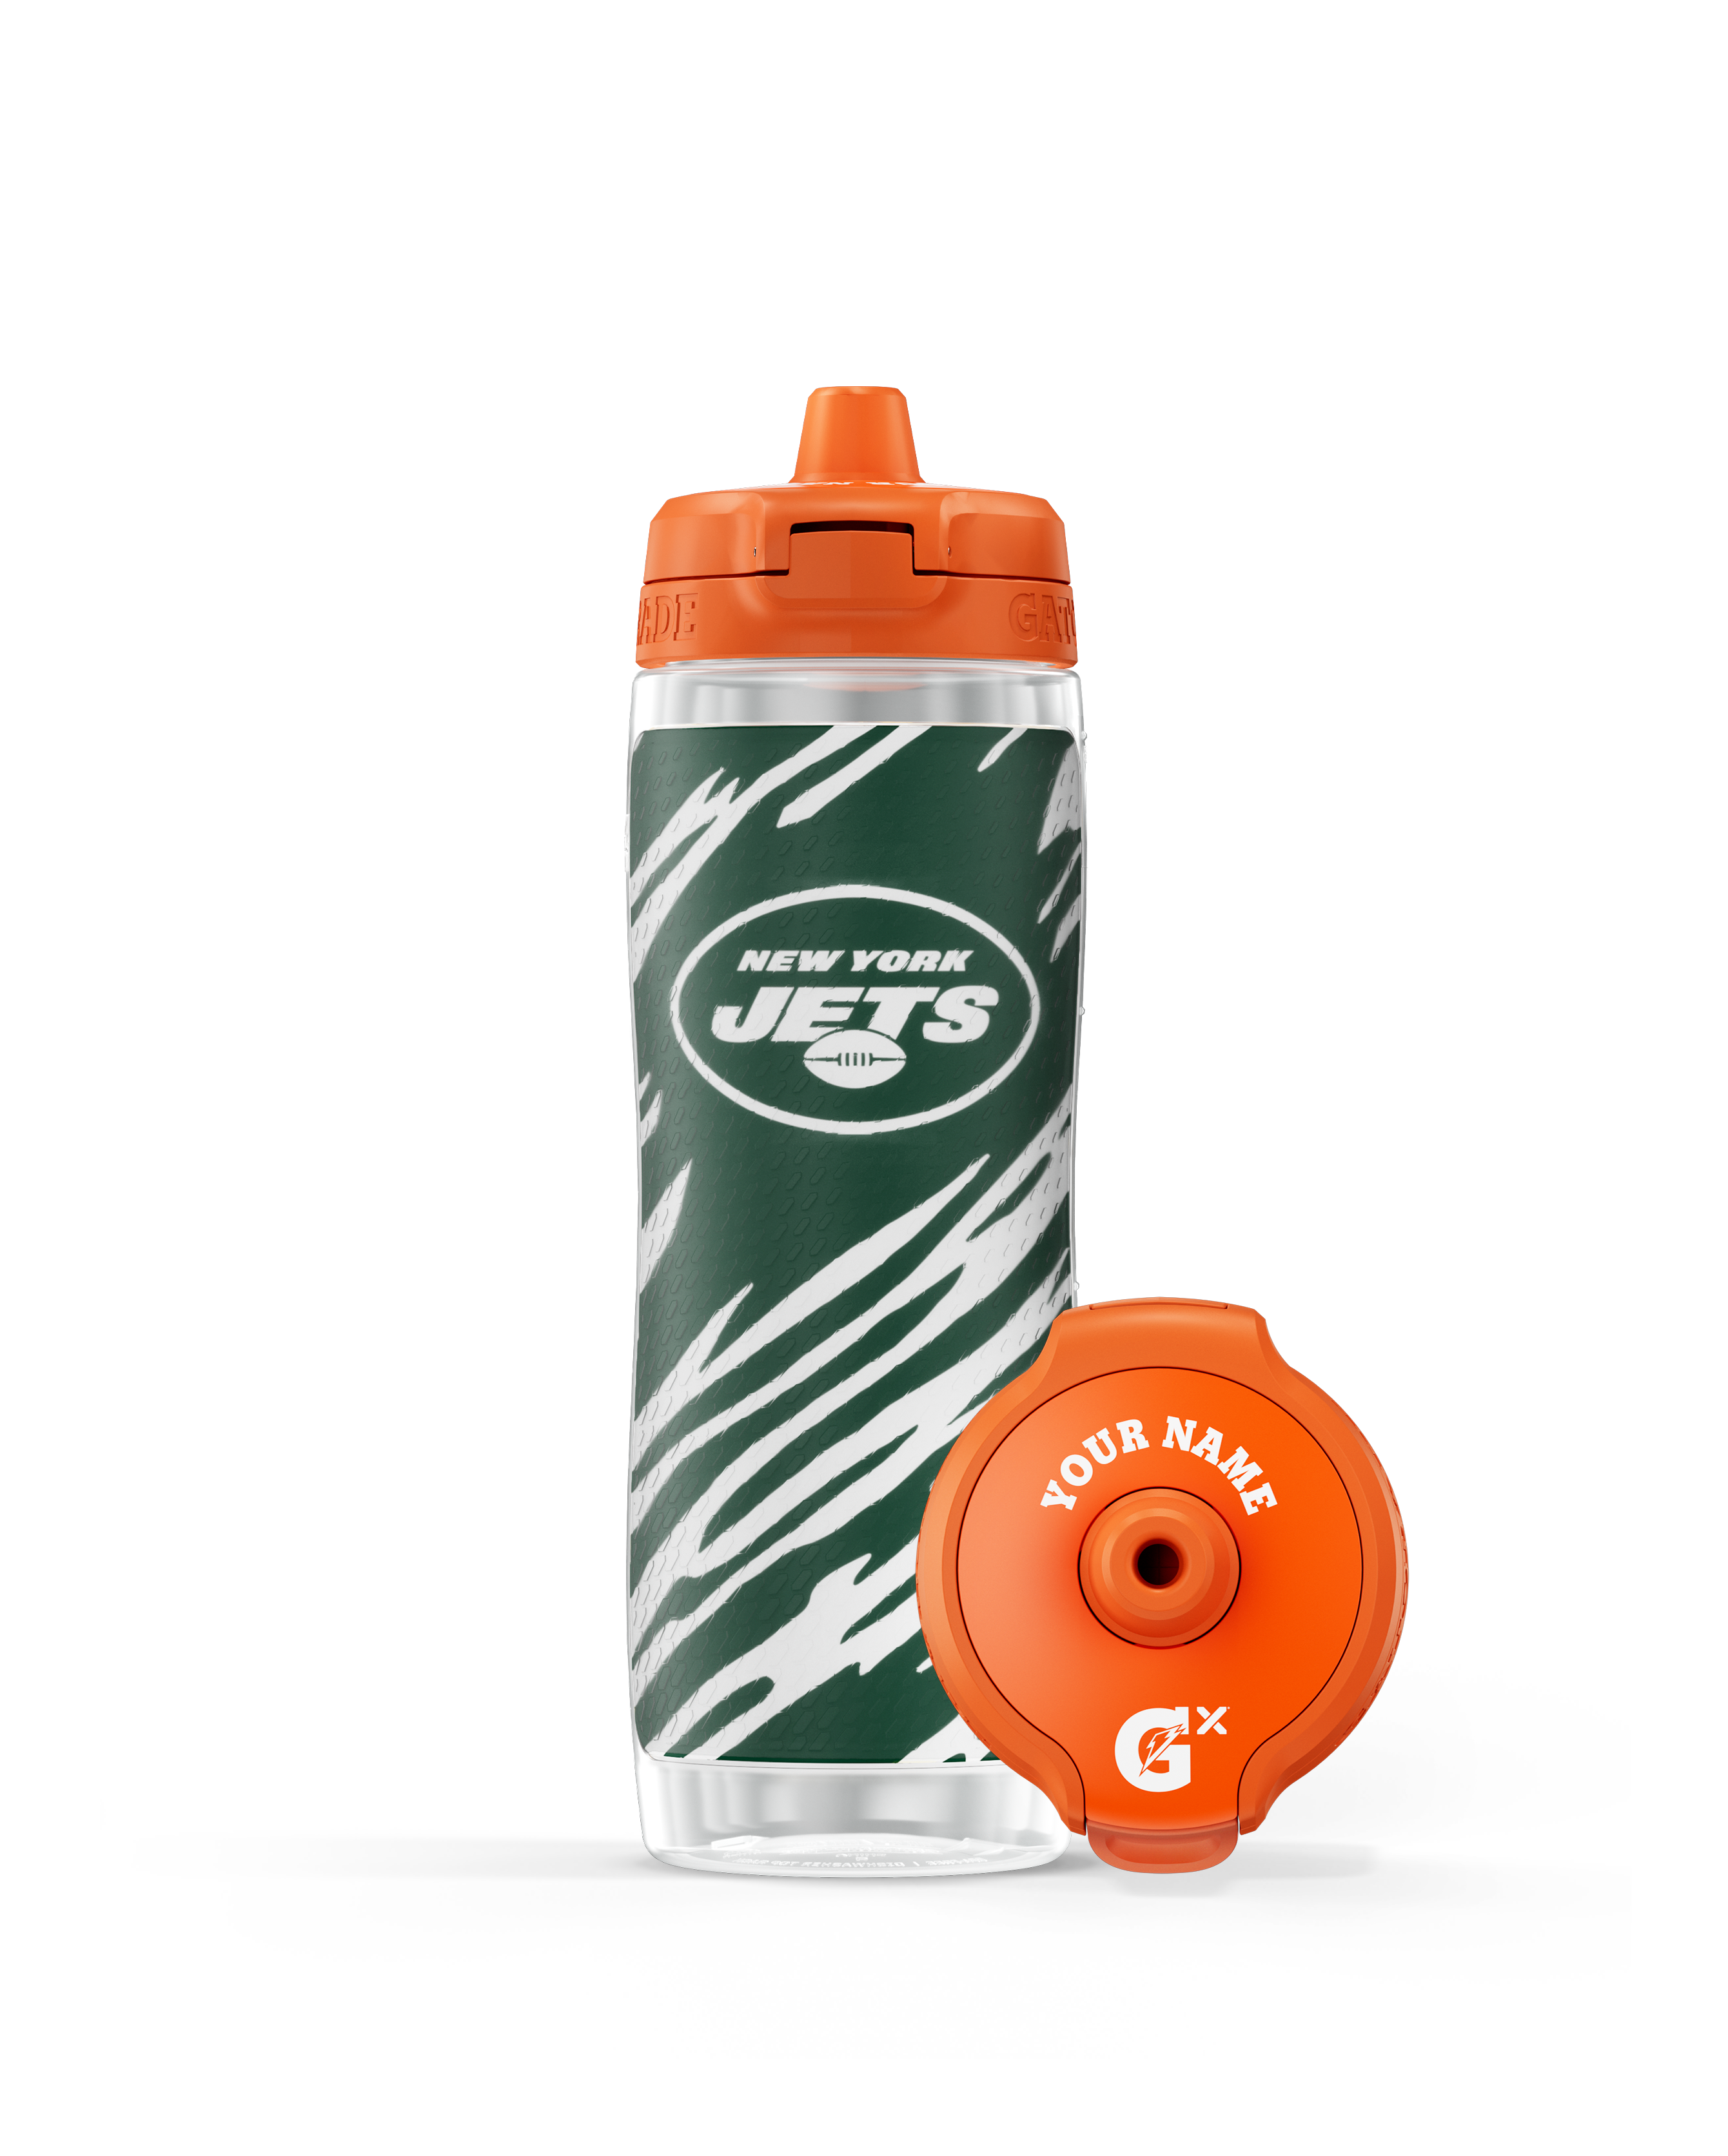 New York Jets NFL Bottle